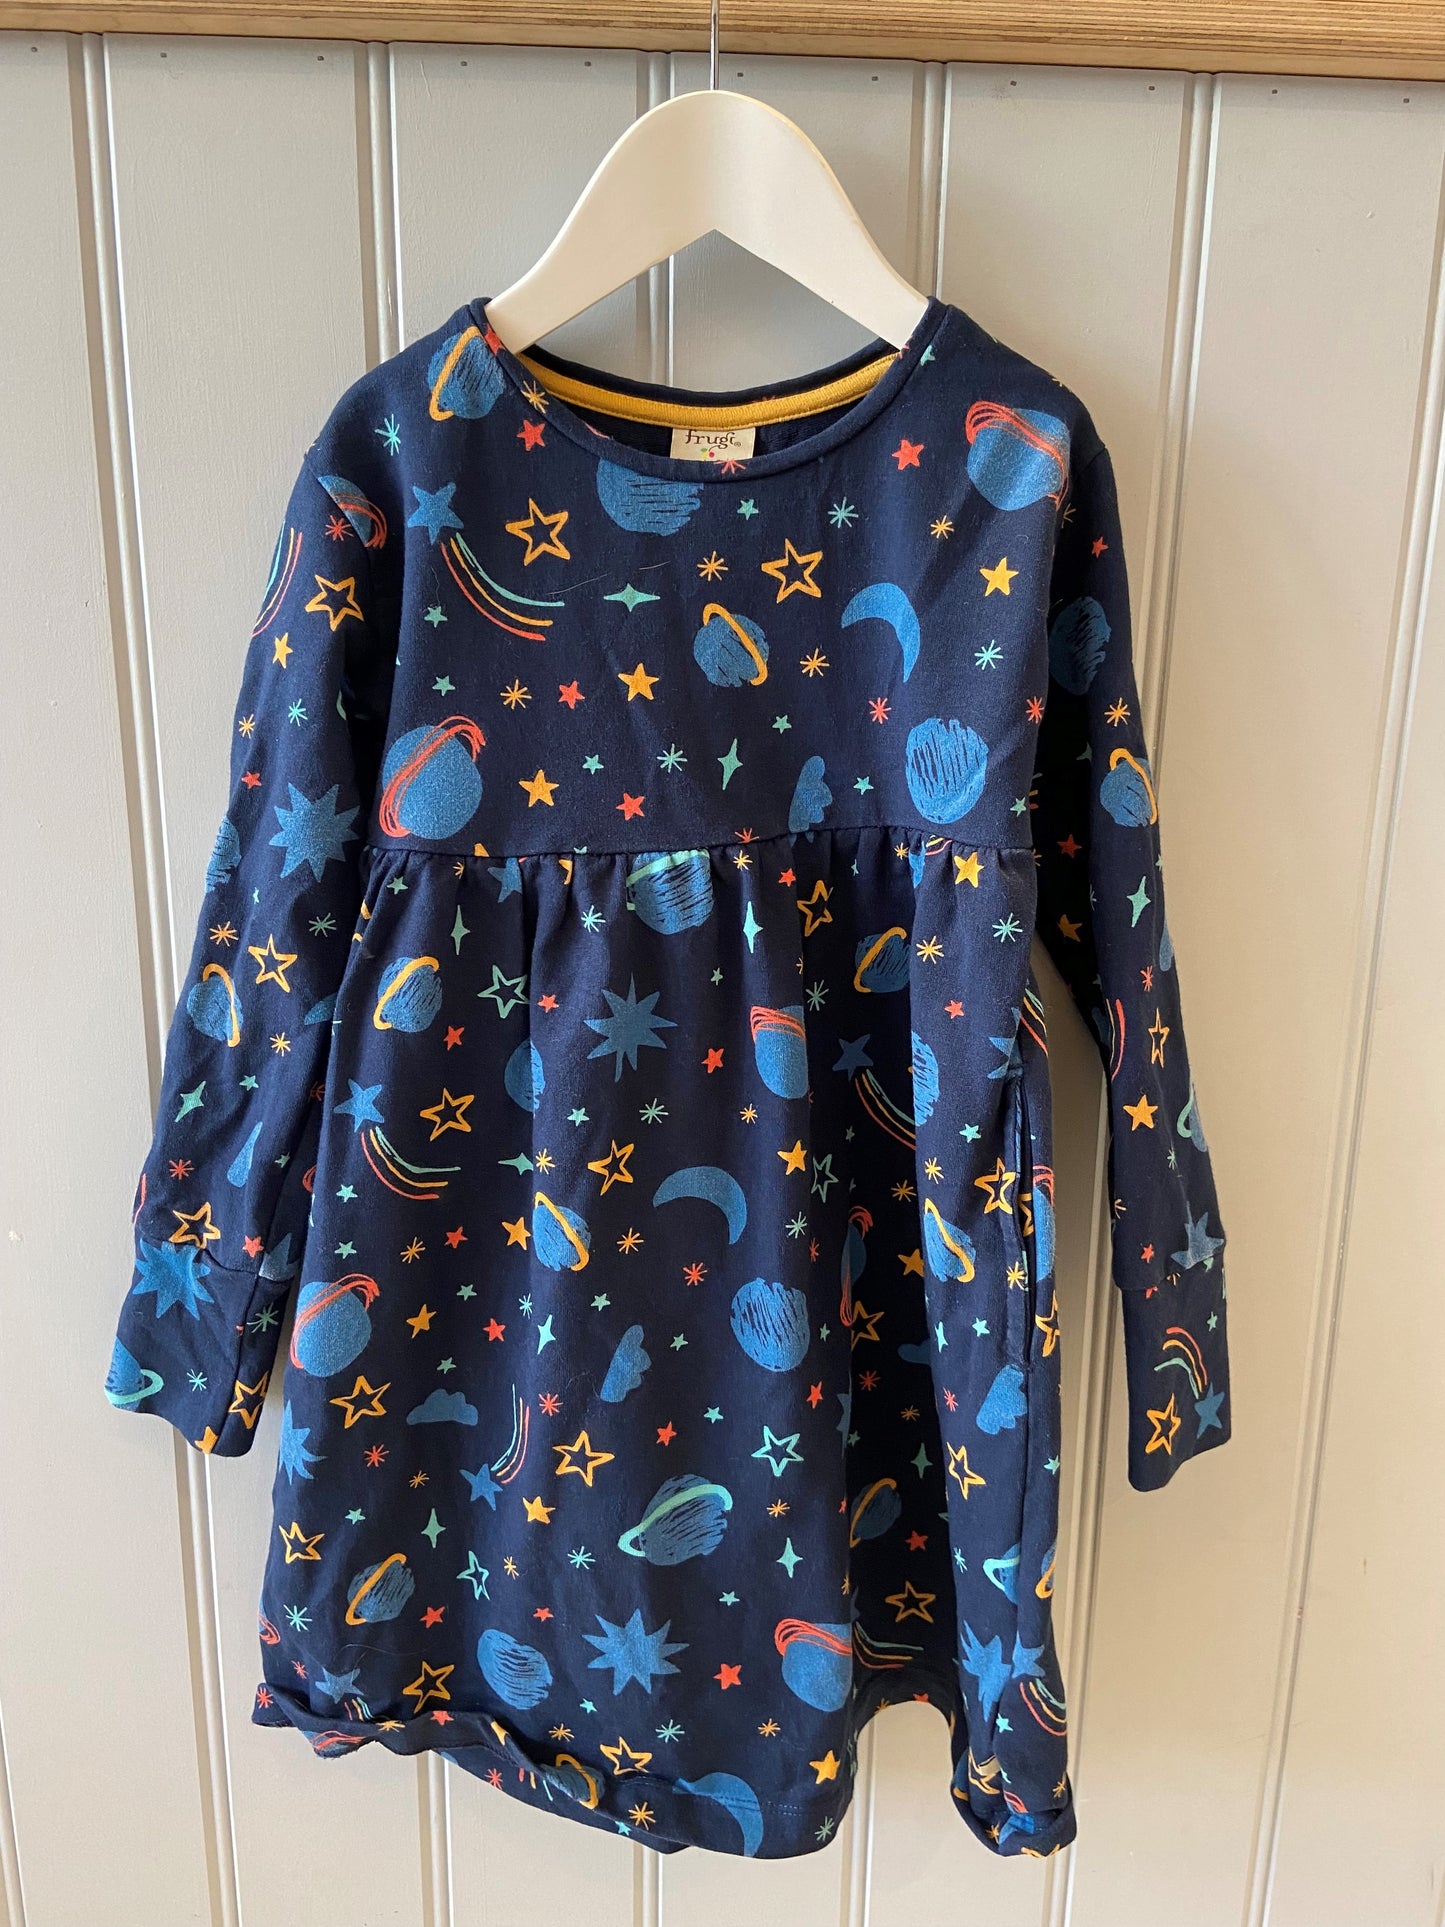 Pre-loved Space Print Dress by Frugi